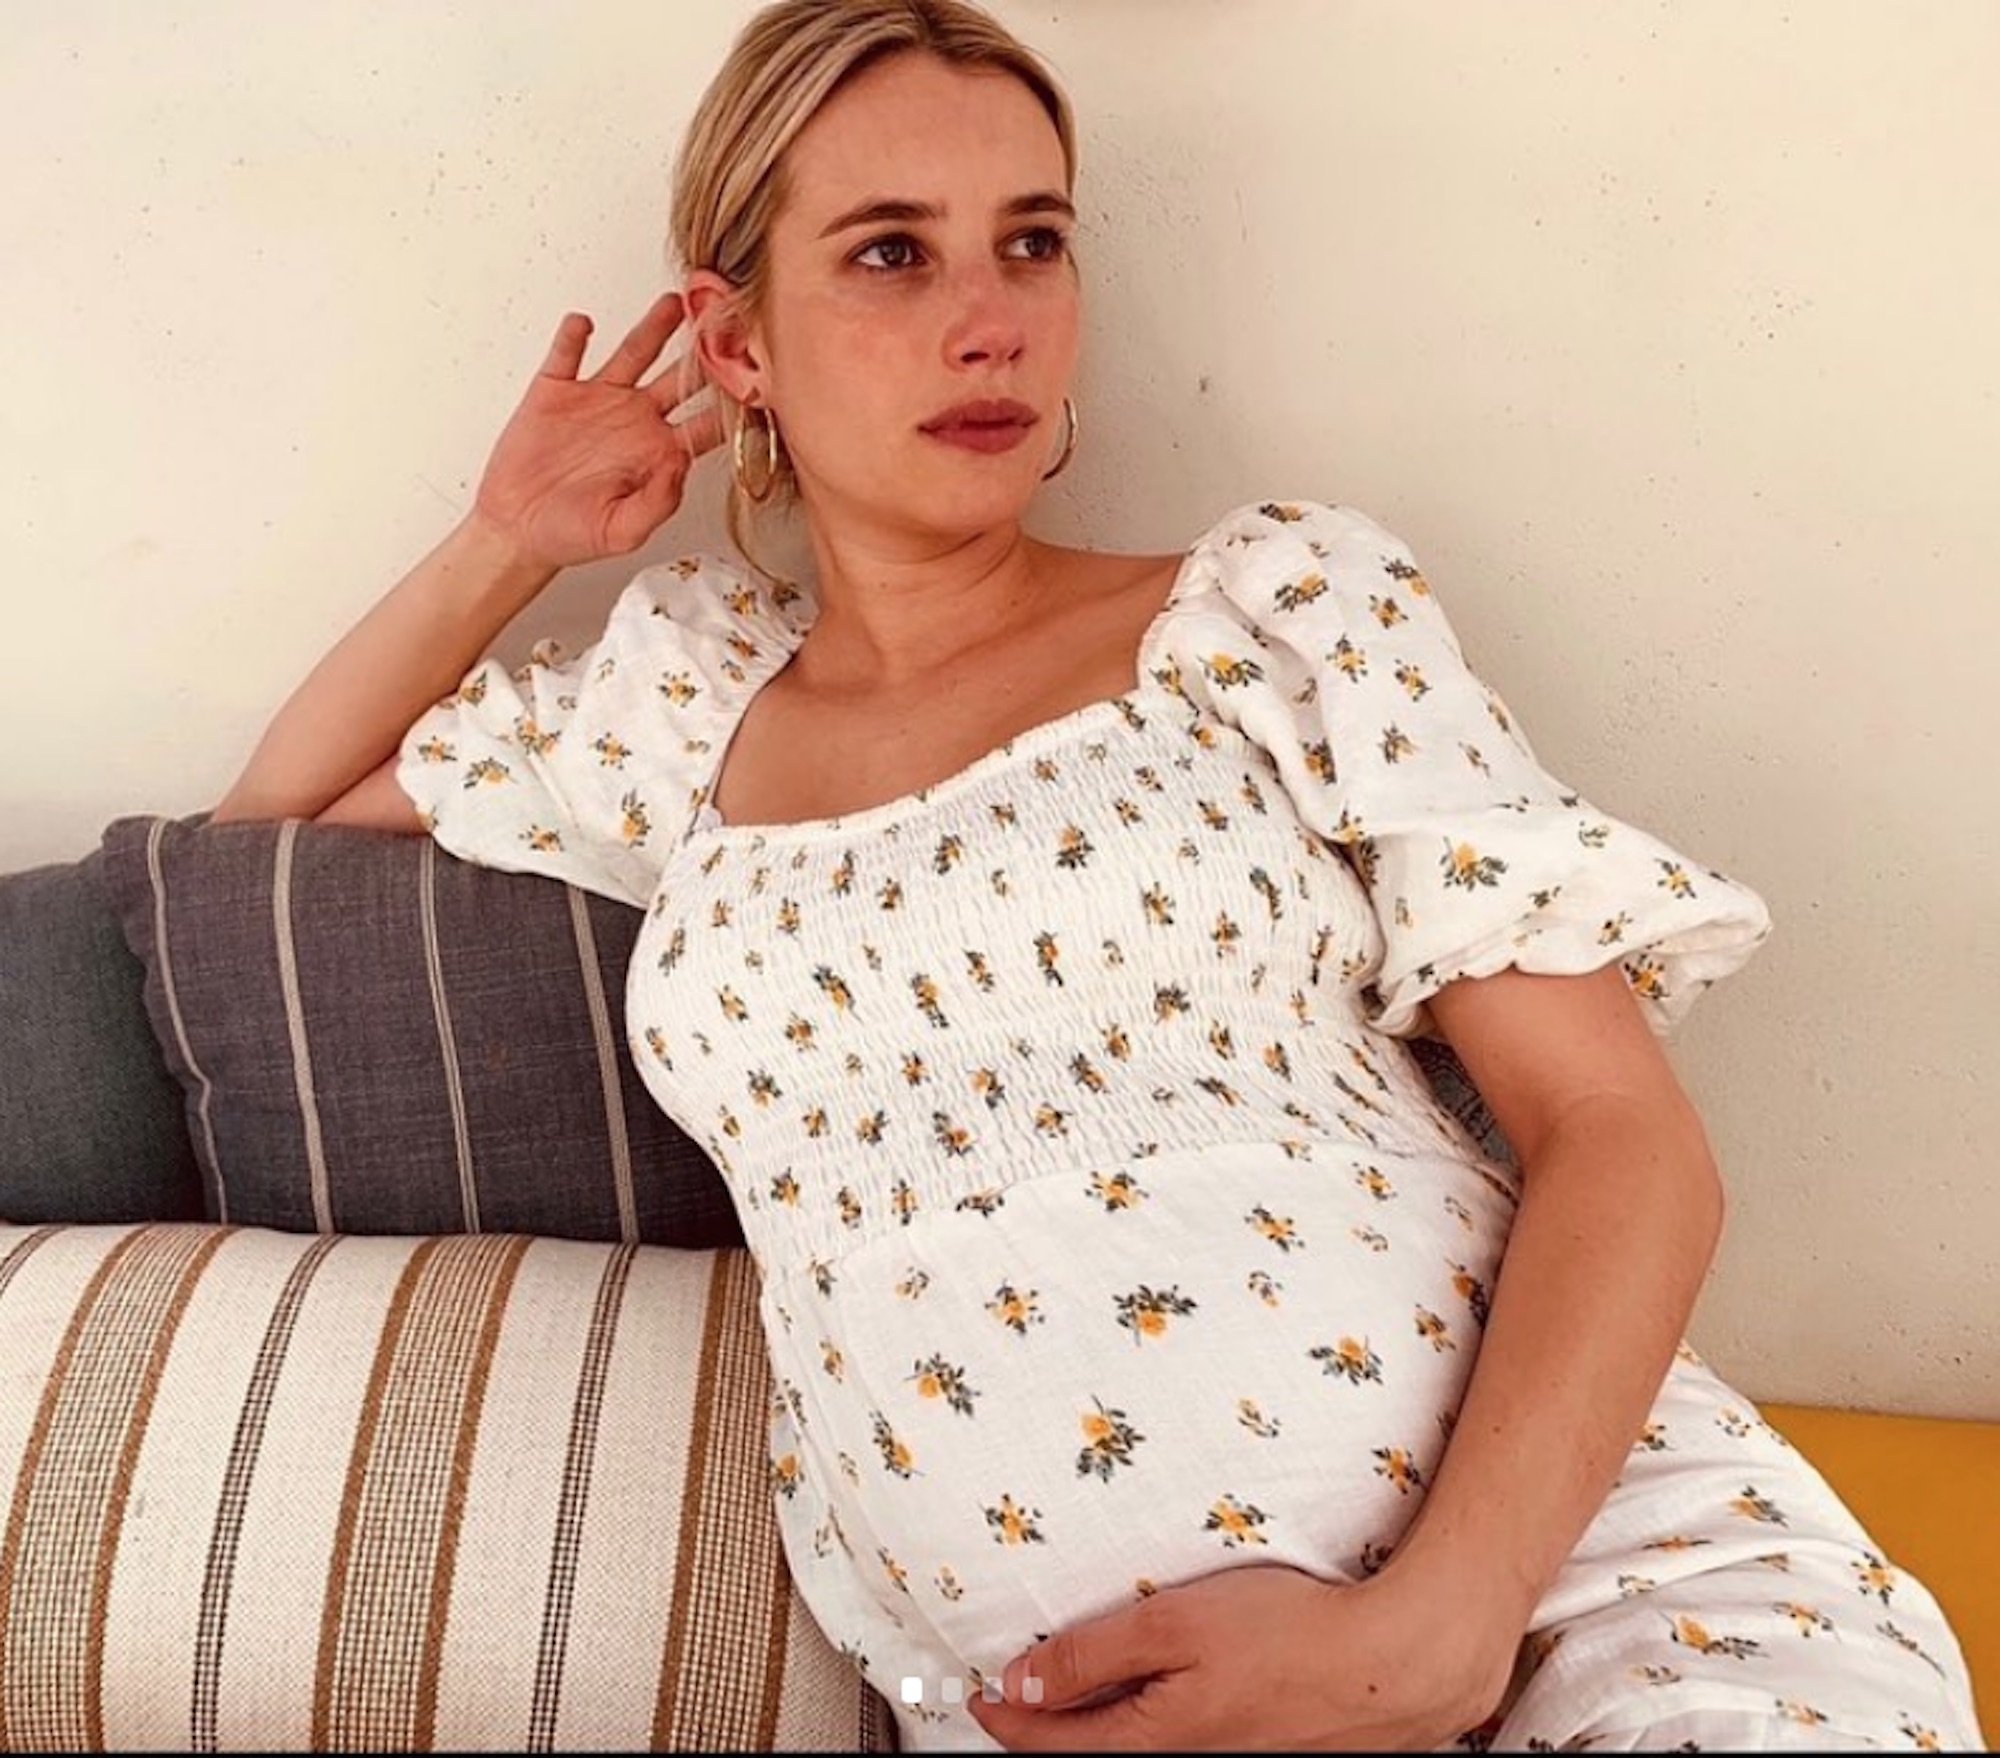 Emma Roberts Porn - Emma Roberts Baby Bump Photos: See the Pregnant Actress!